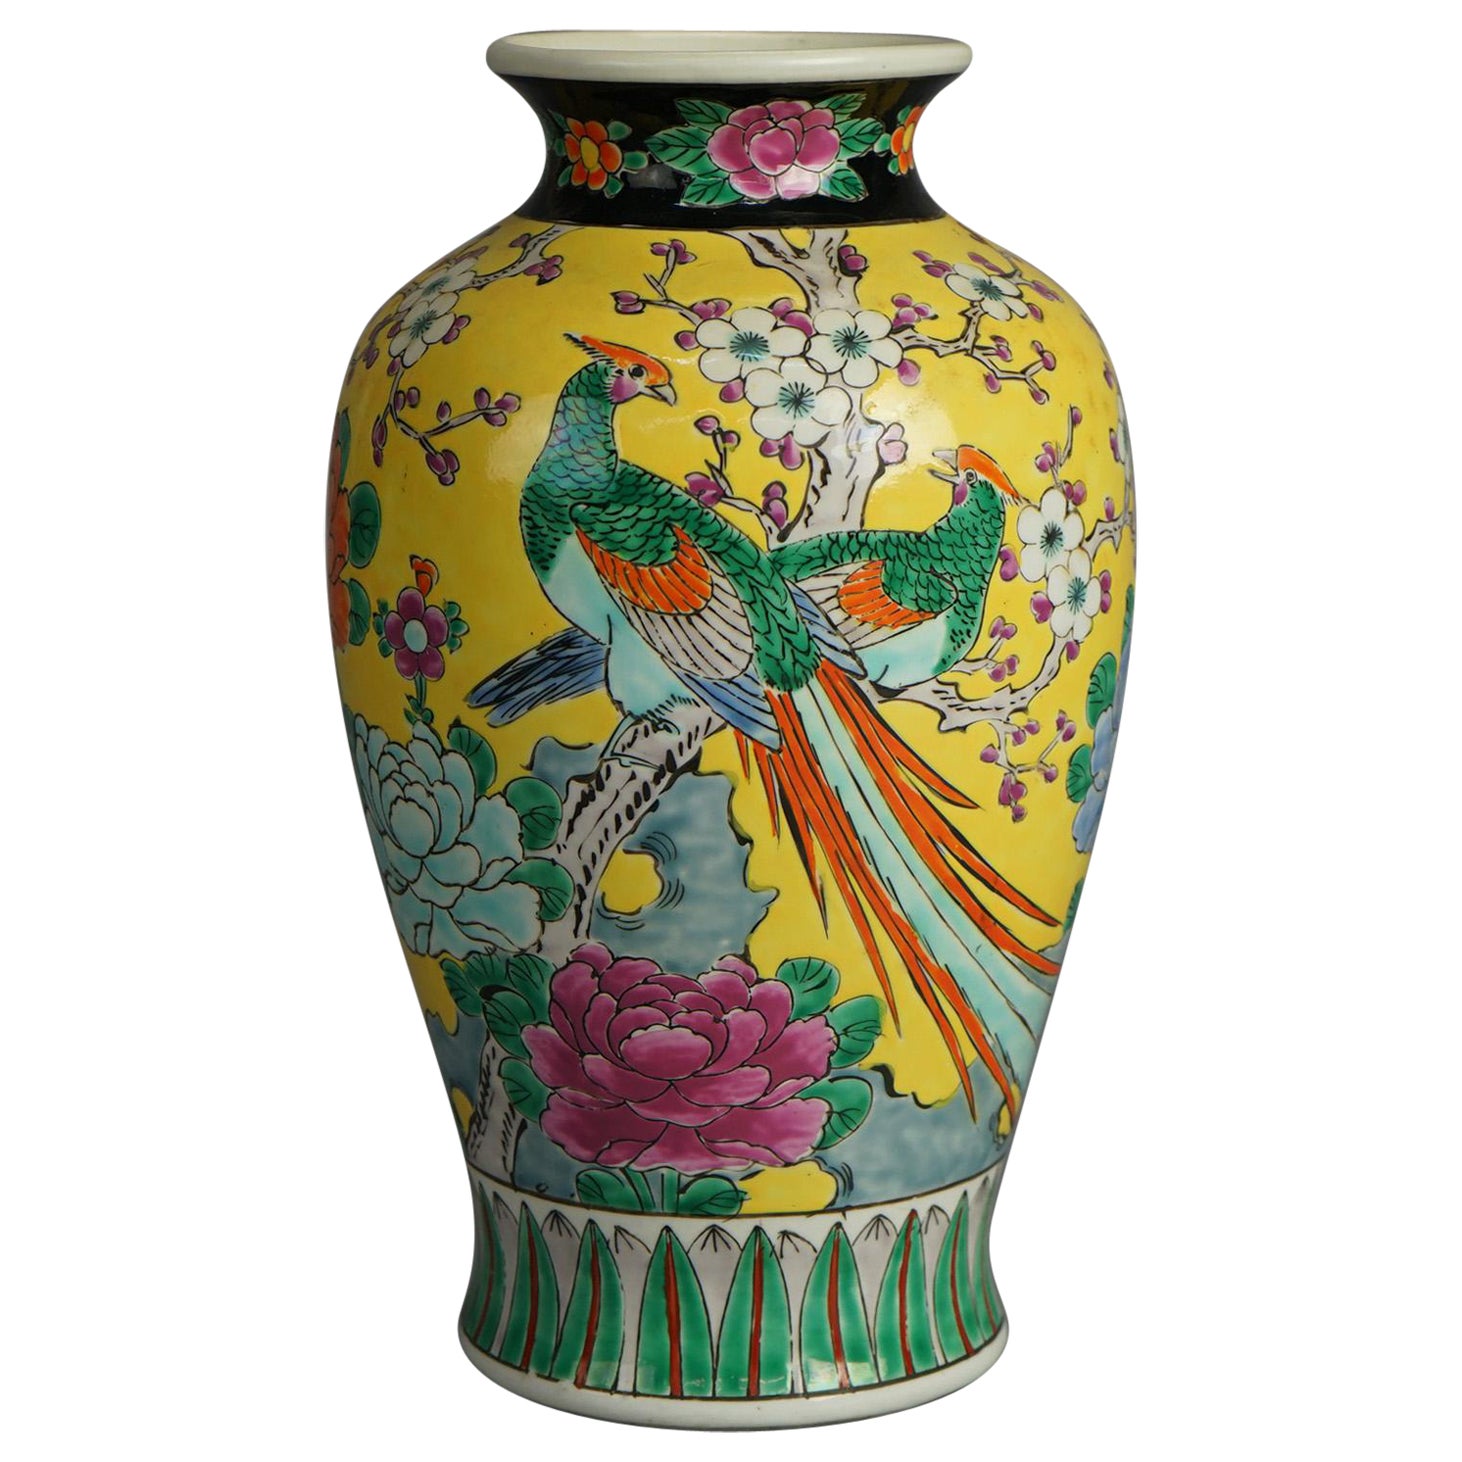 Antike japanische Porzellan emaillierte Vase, Garten &Szene Fasan C1910